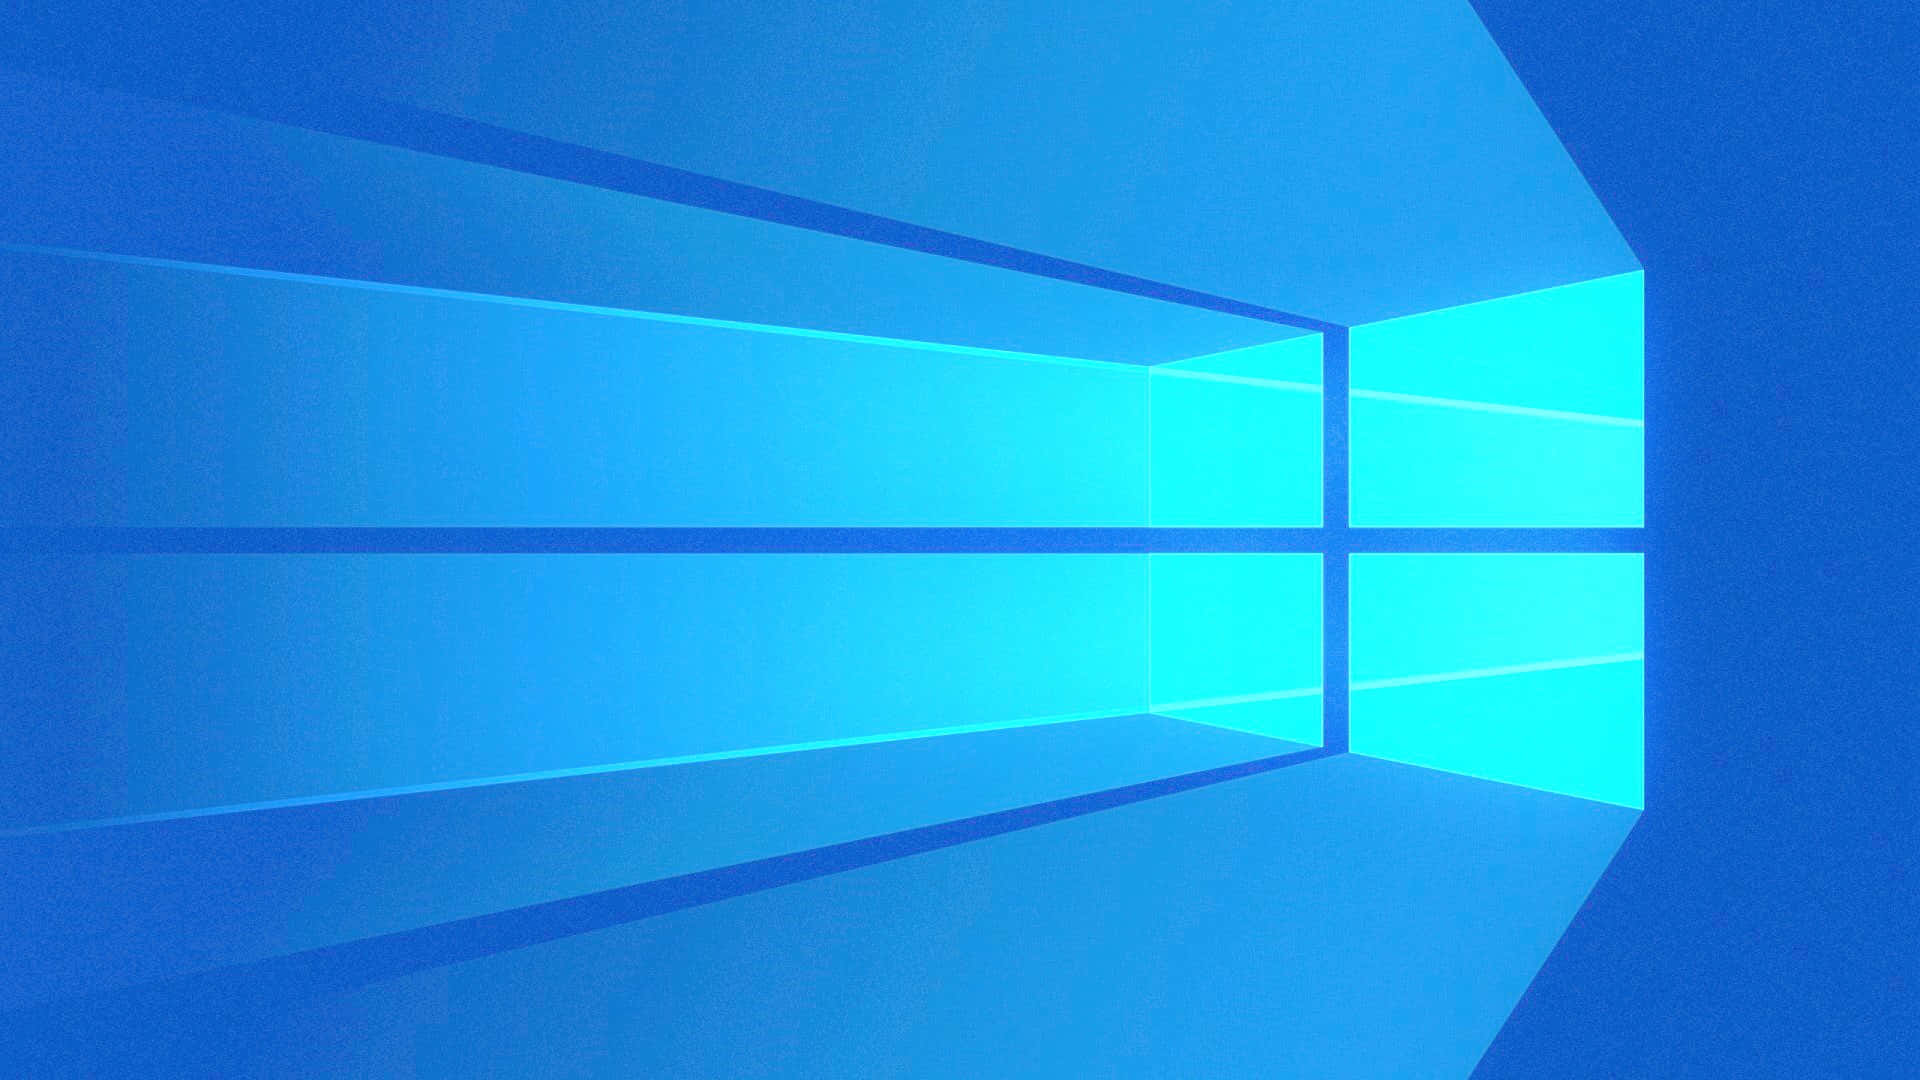 Enjoy the Minimalism of Windows 10